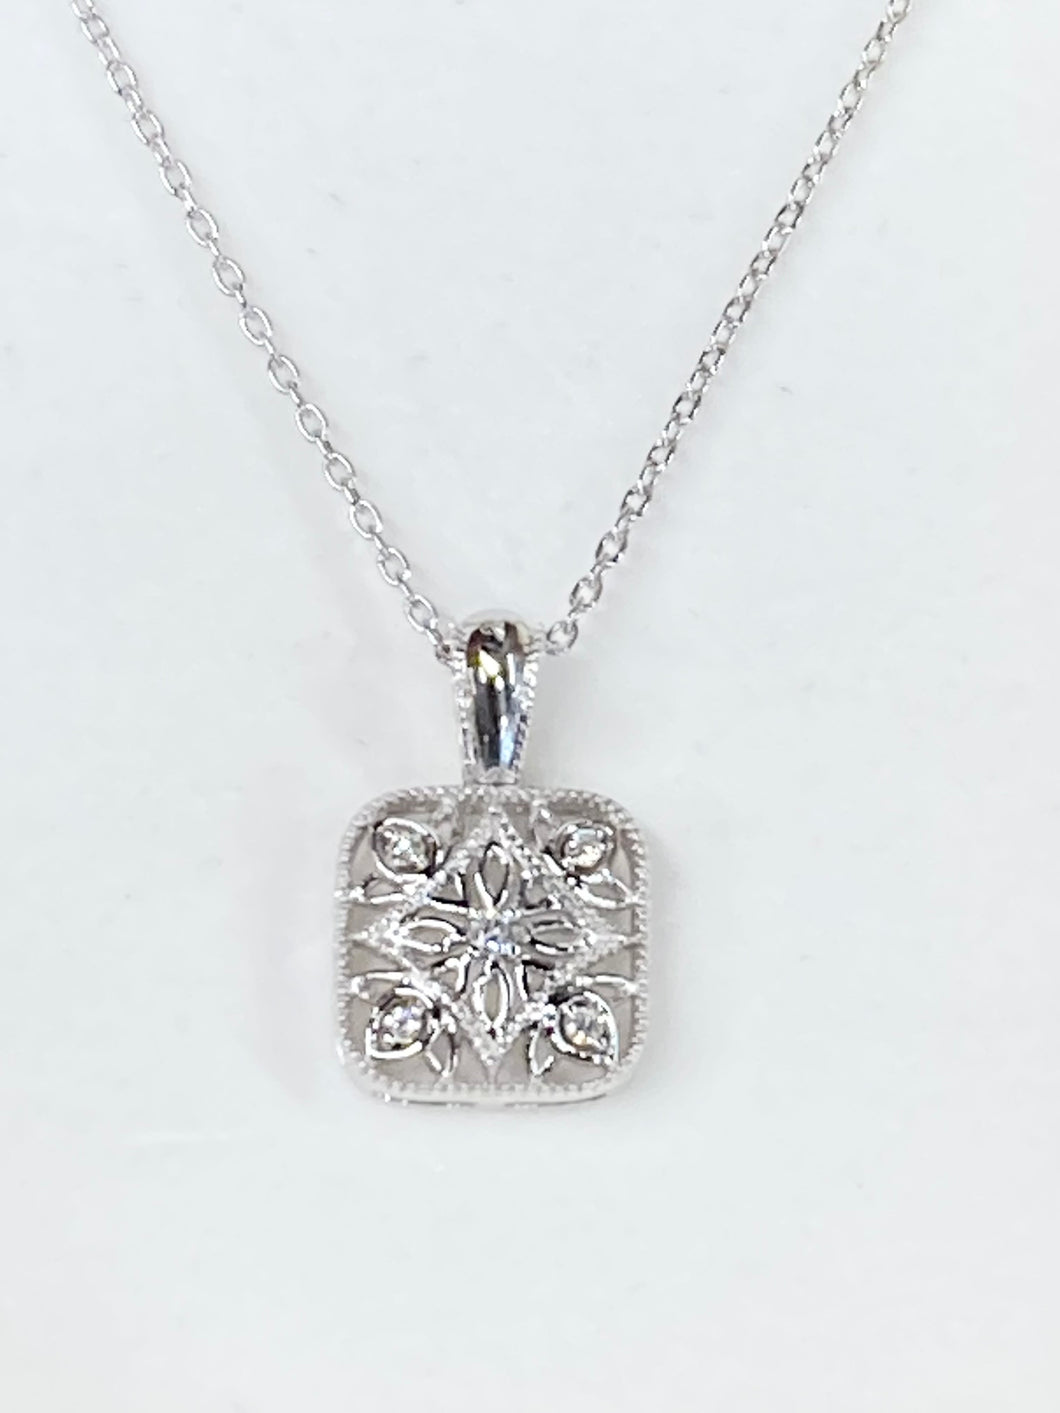 Silver Filigree Diamond Pendant